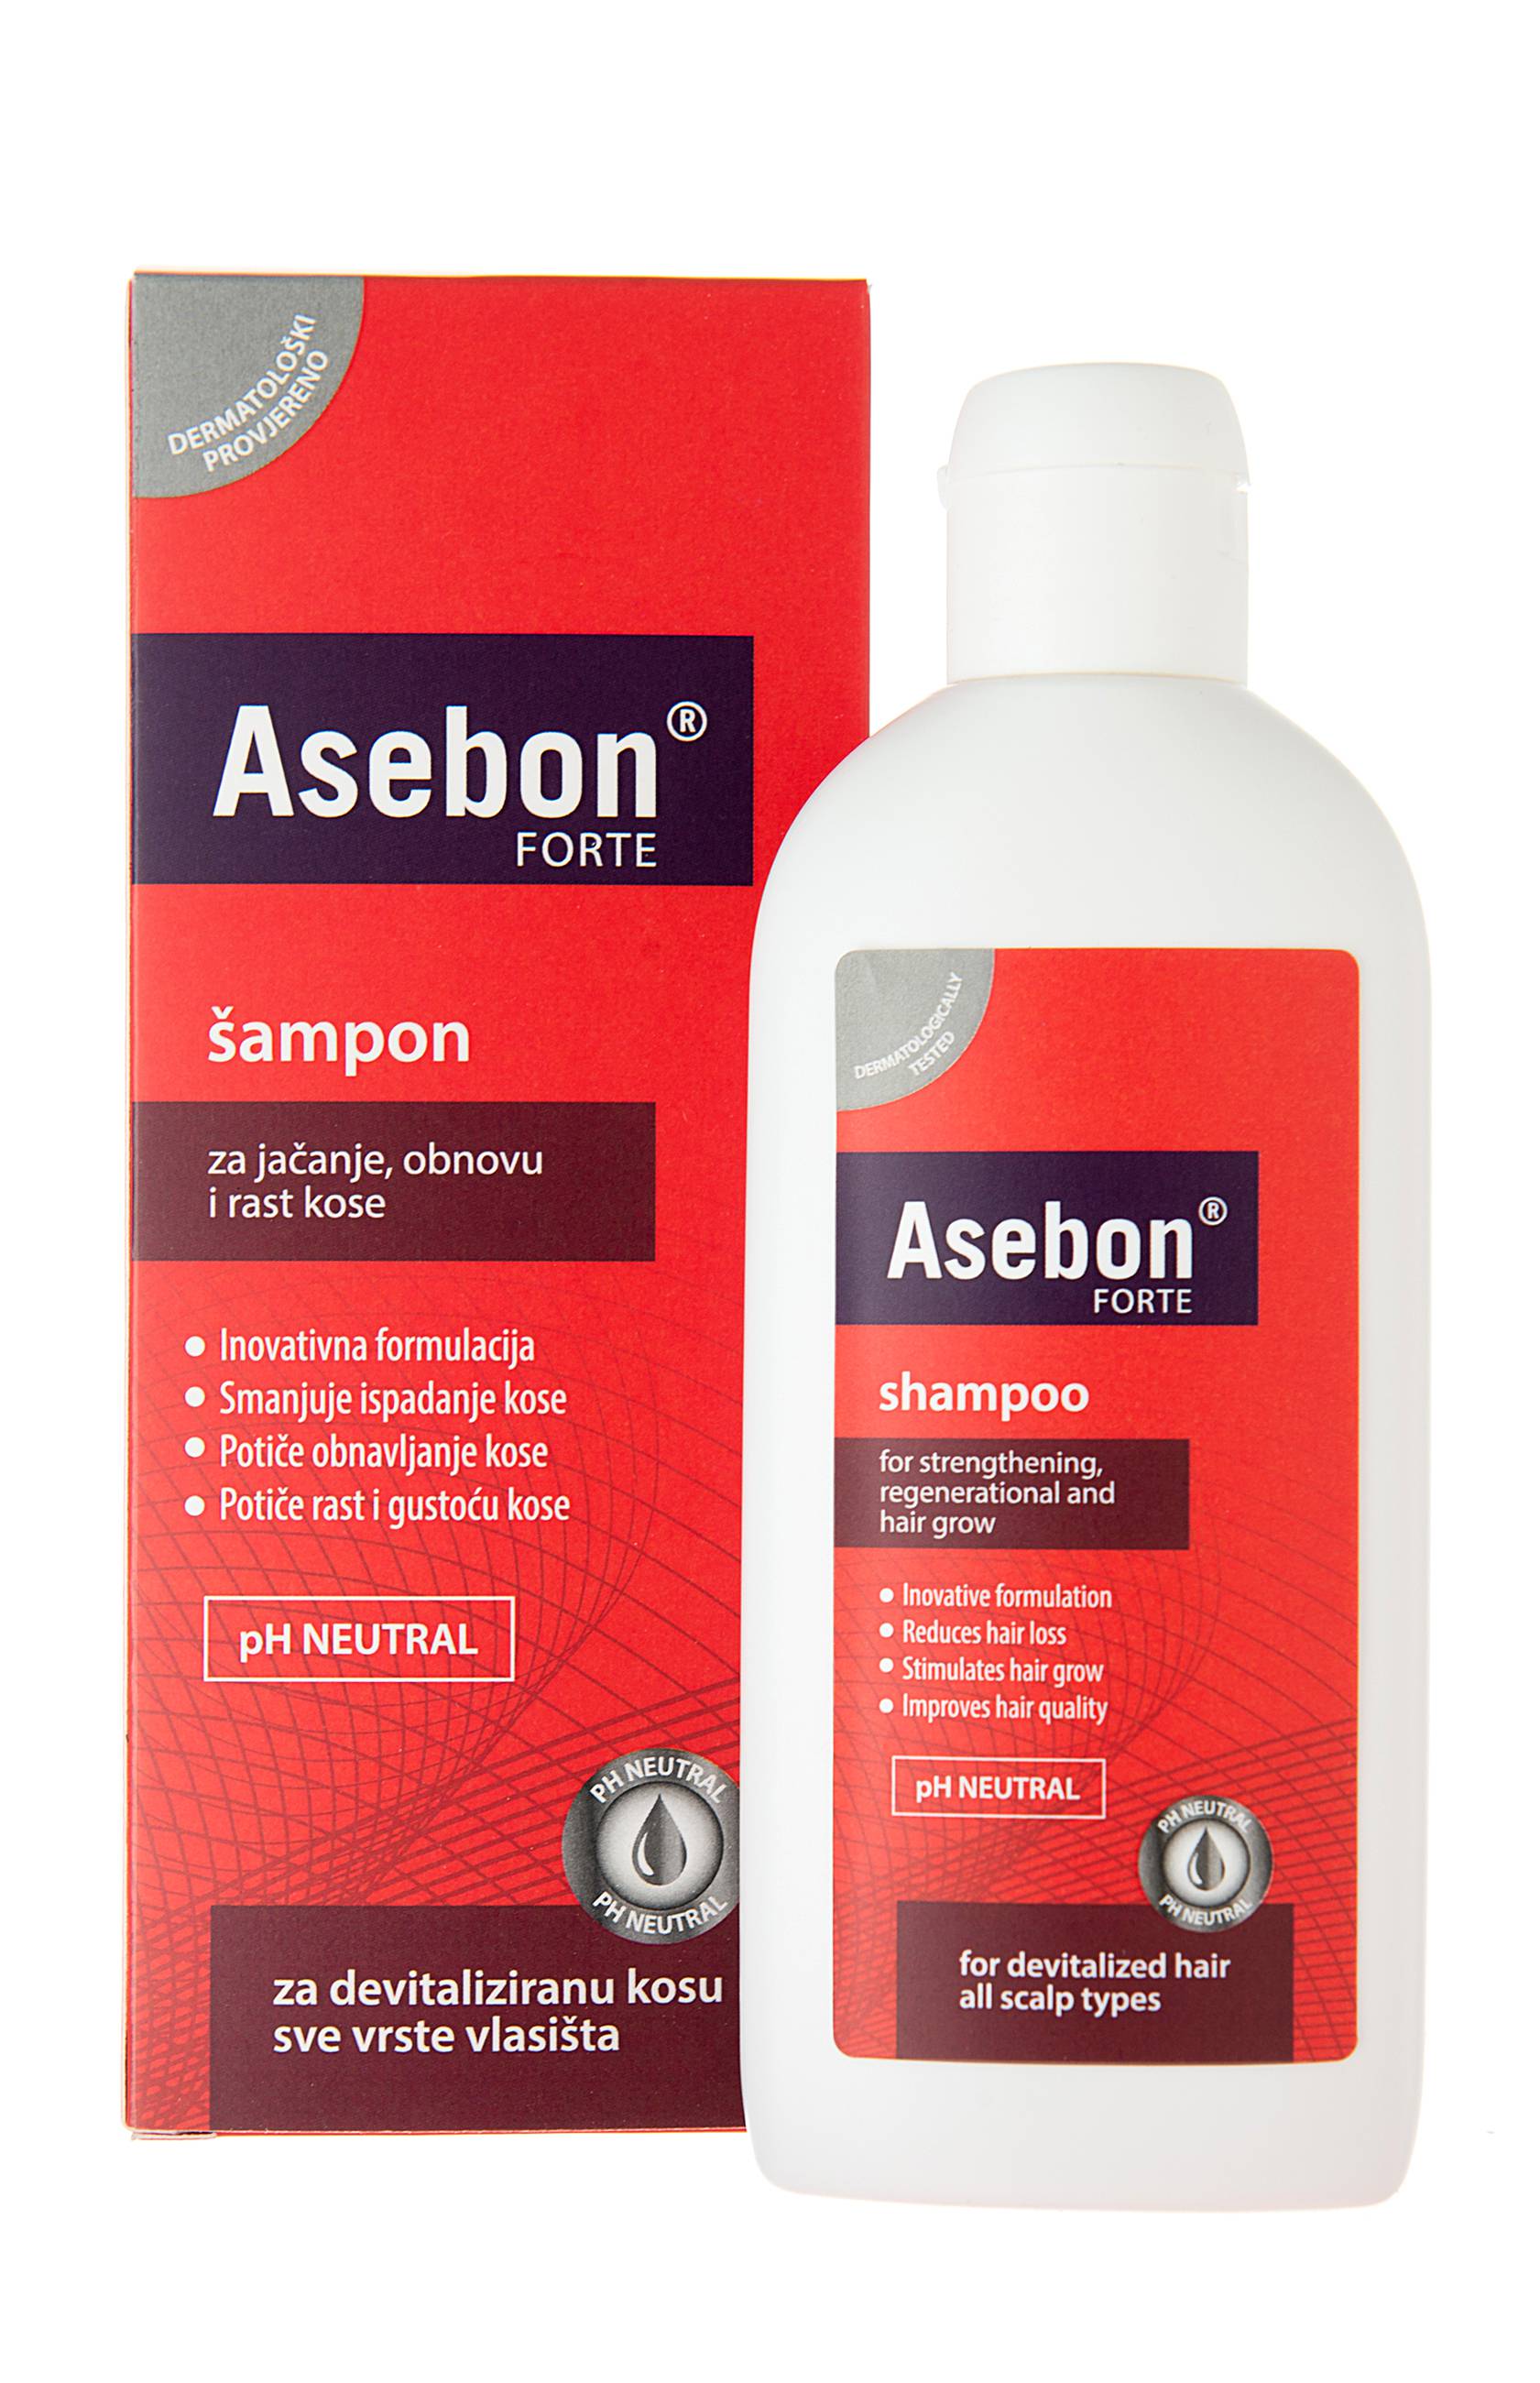 Asebon – stručnjak za vitalnost i gustoću kose